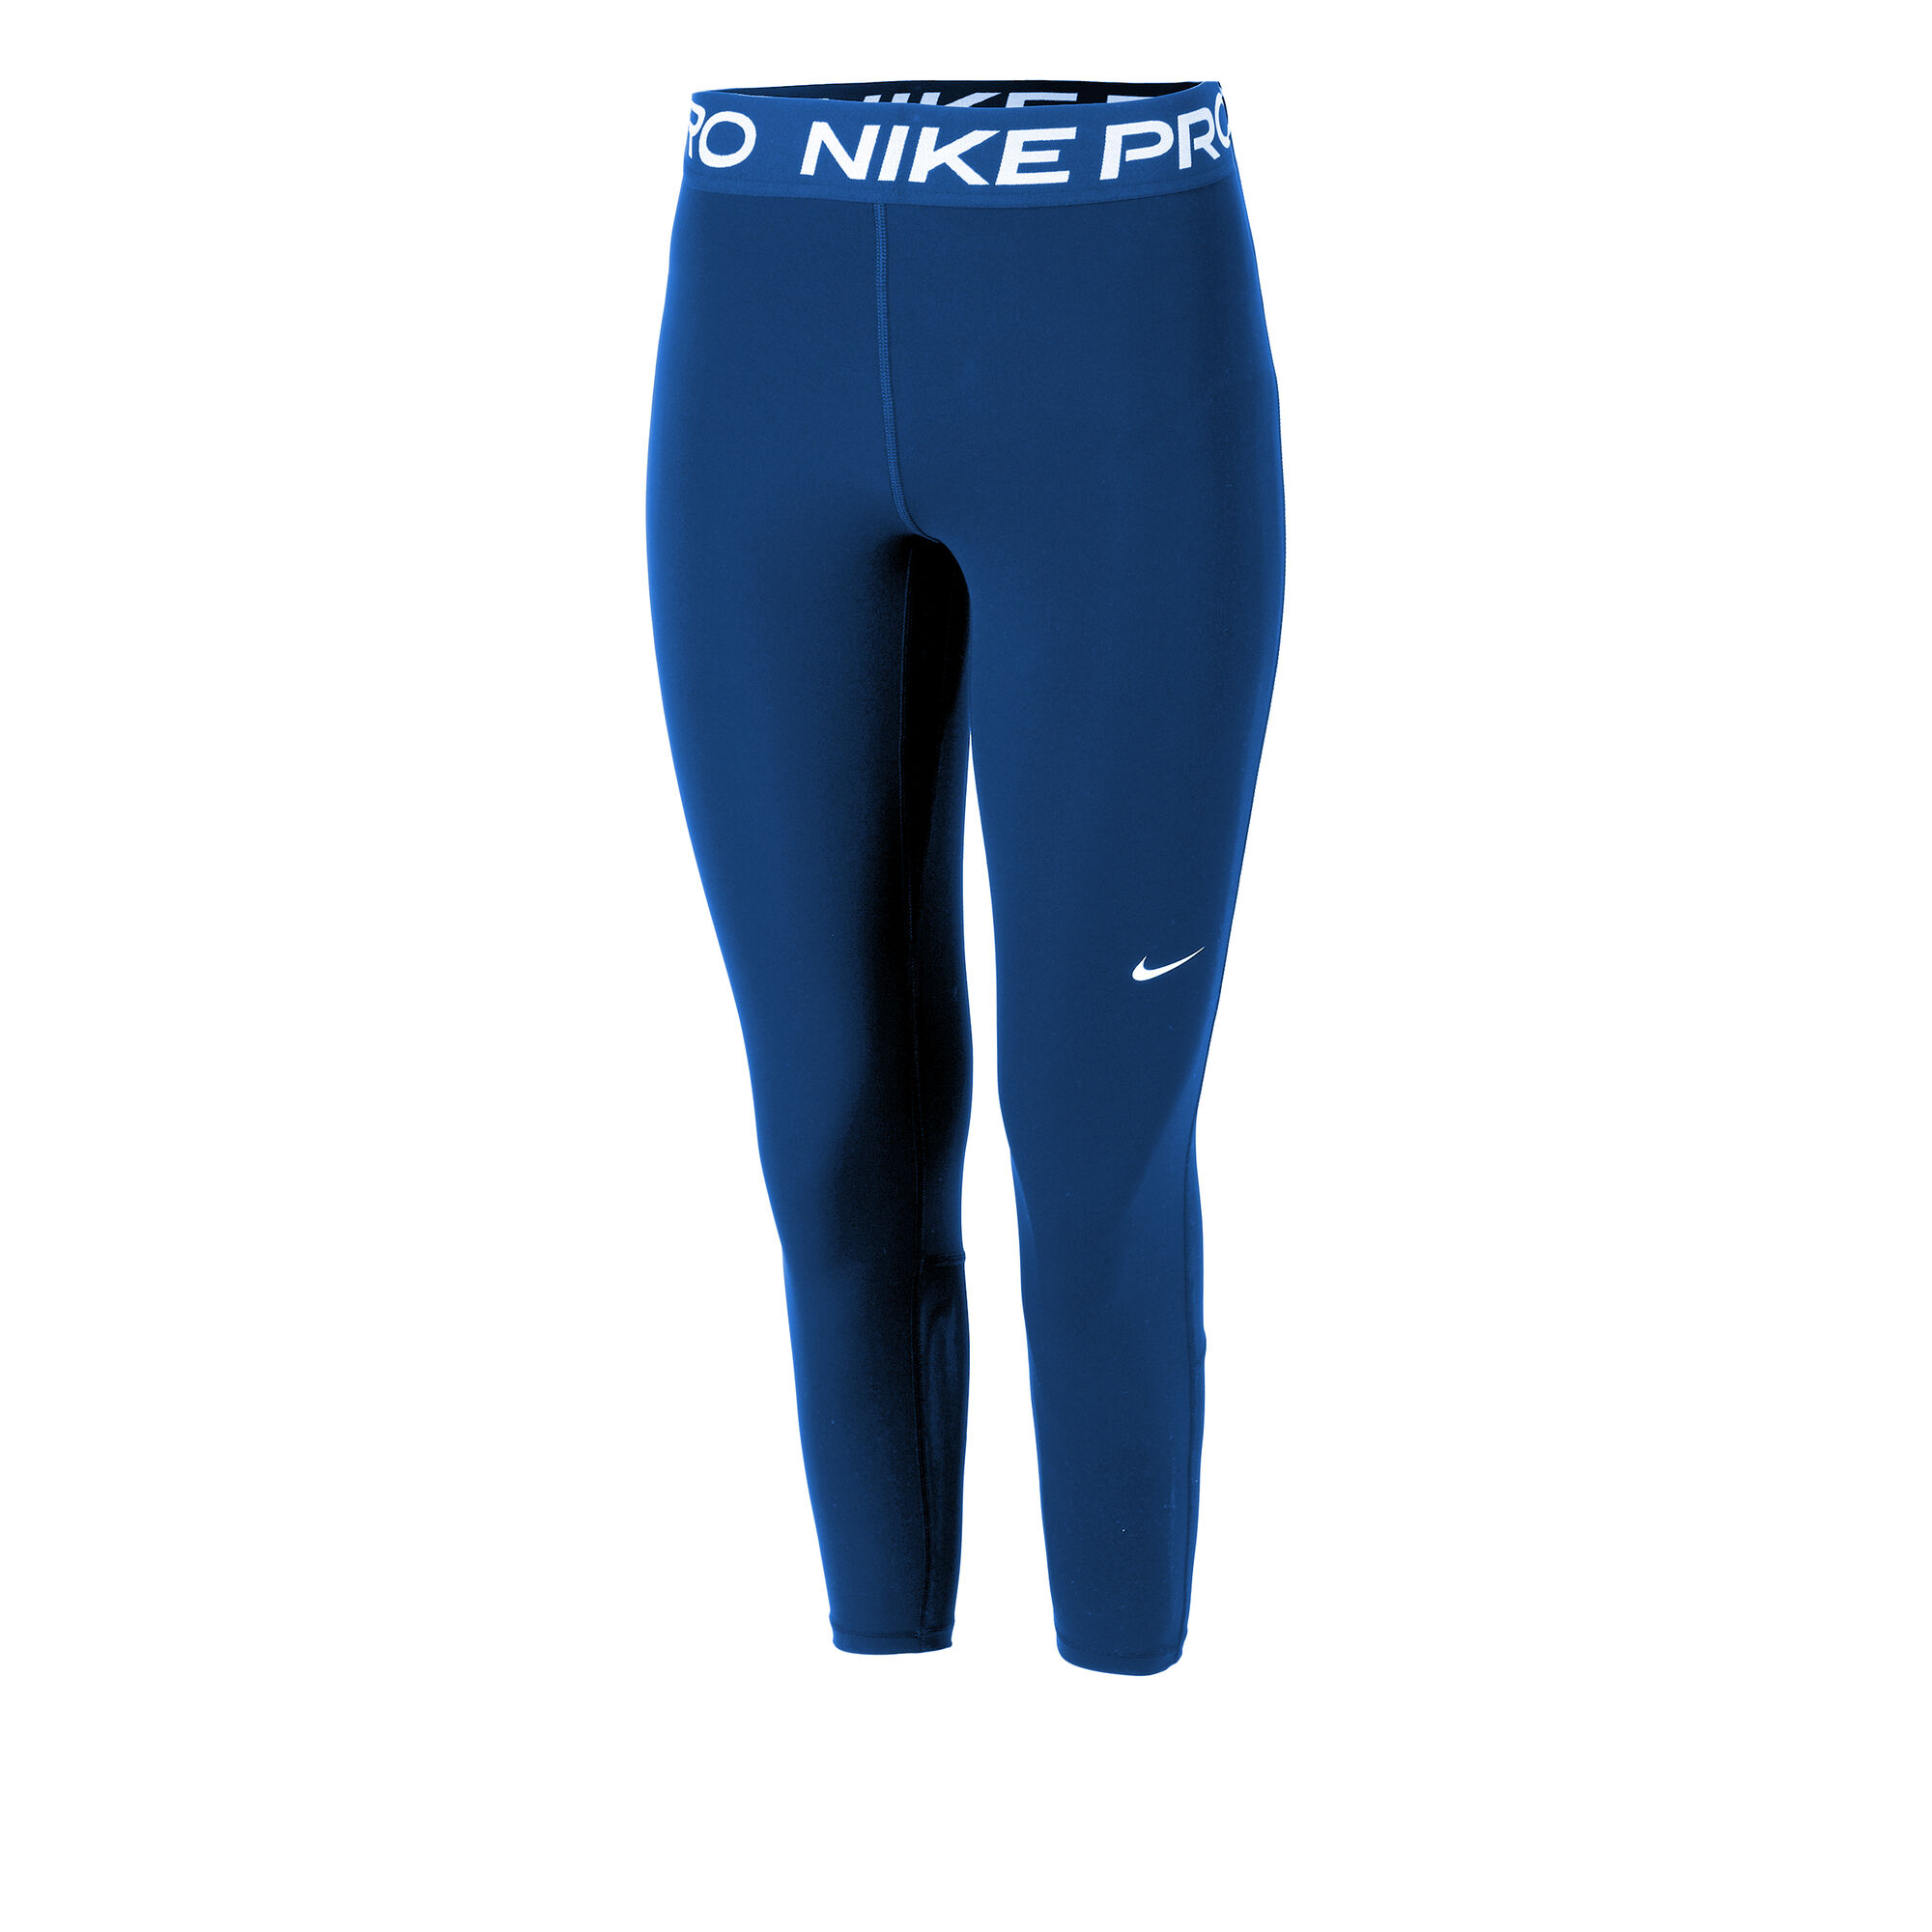 Buy Nike Pro 365 Crop Tight Women Blue, White online